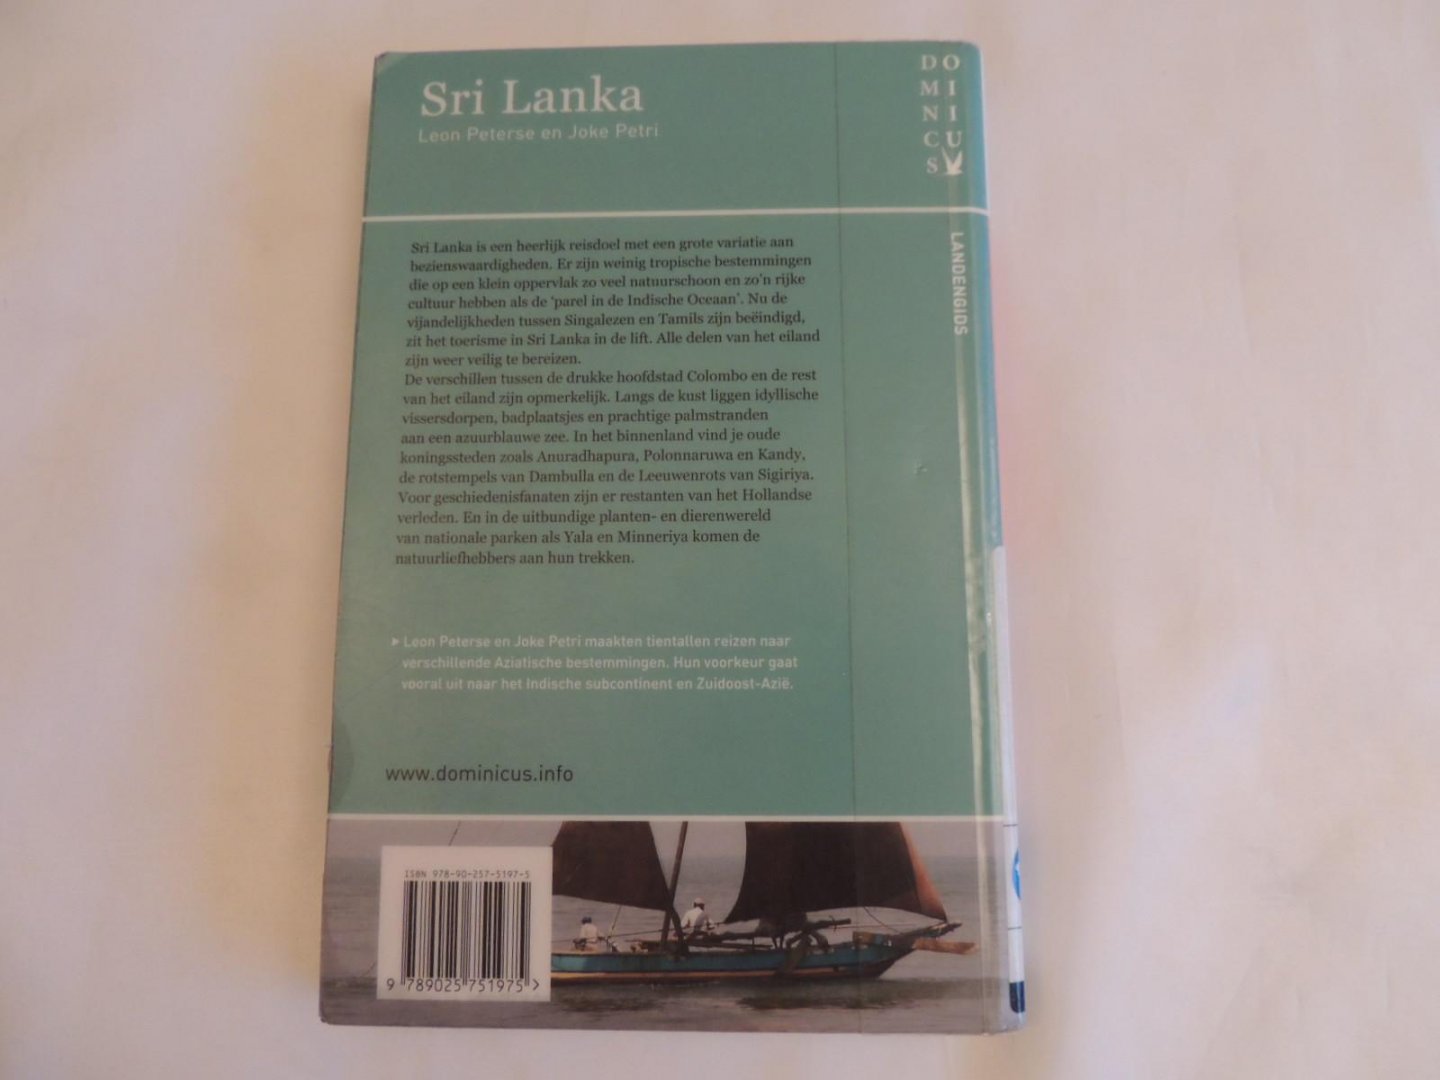 Peterse, Leon - Joke Petri - Dominicus landengids - Sri Lanka